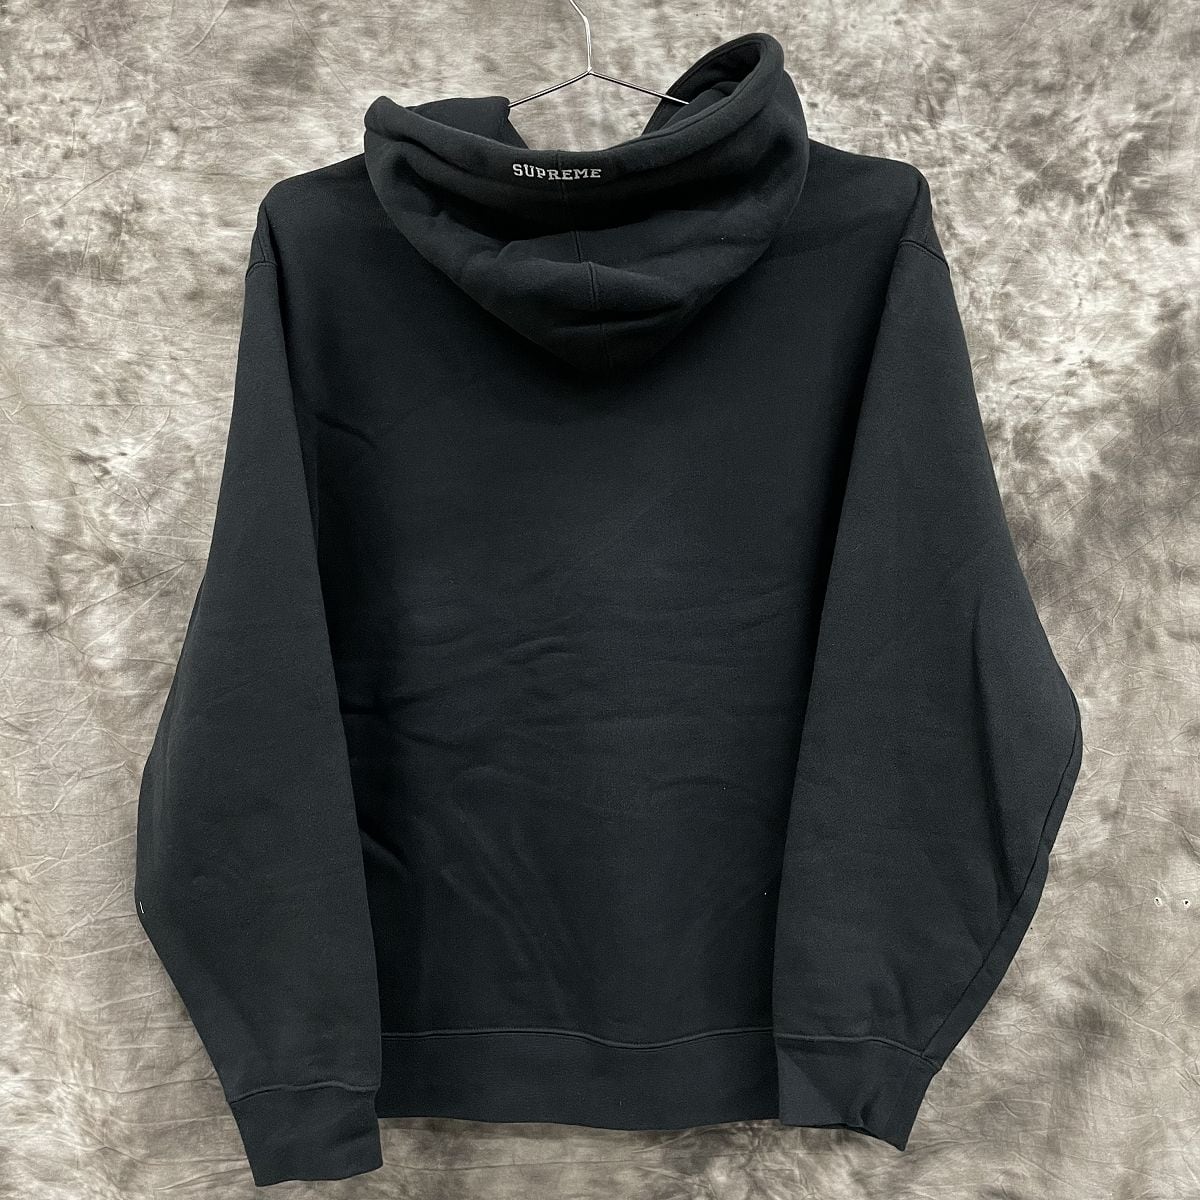 Supreme×NIKE/シュプリーム×ナイキ【19AW】Leather Applique Hooded Sweatshirt  プルオーバースウェットパーカー CK6225-010/M